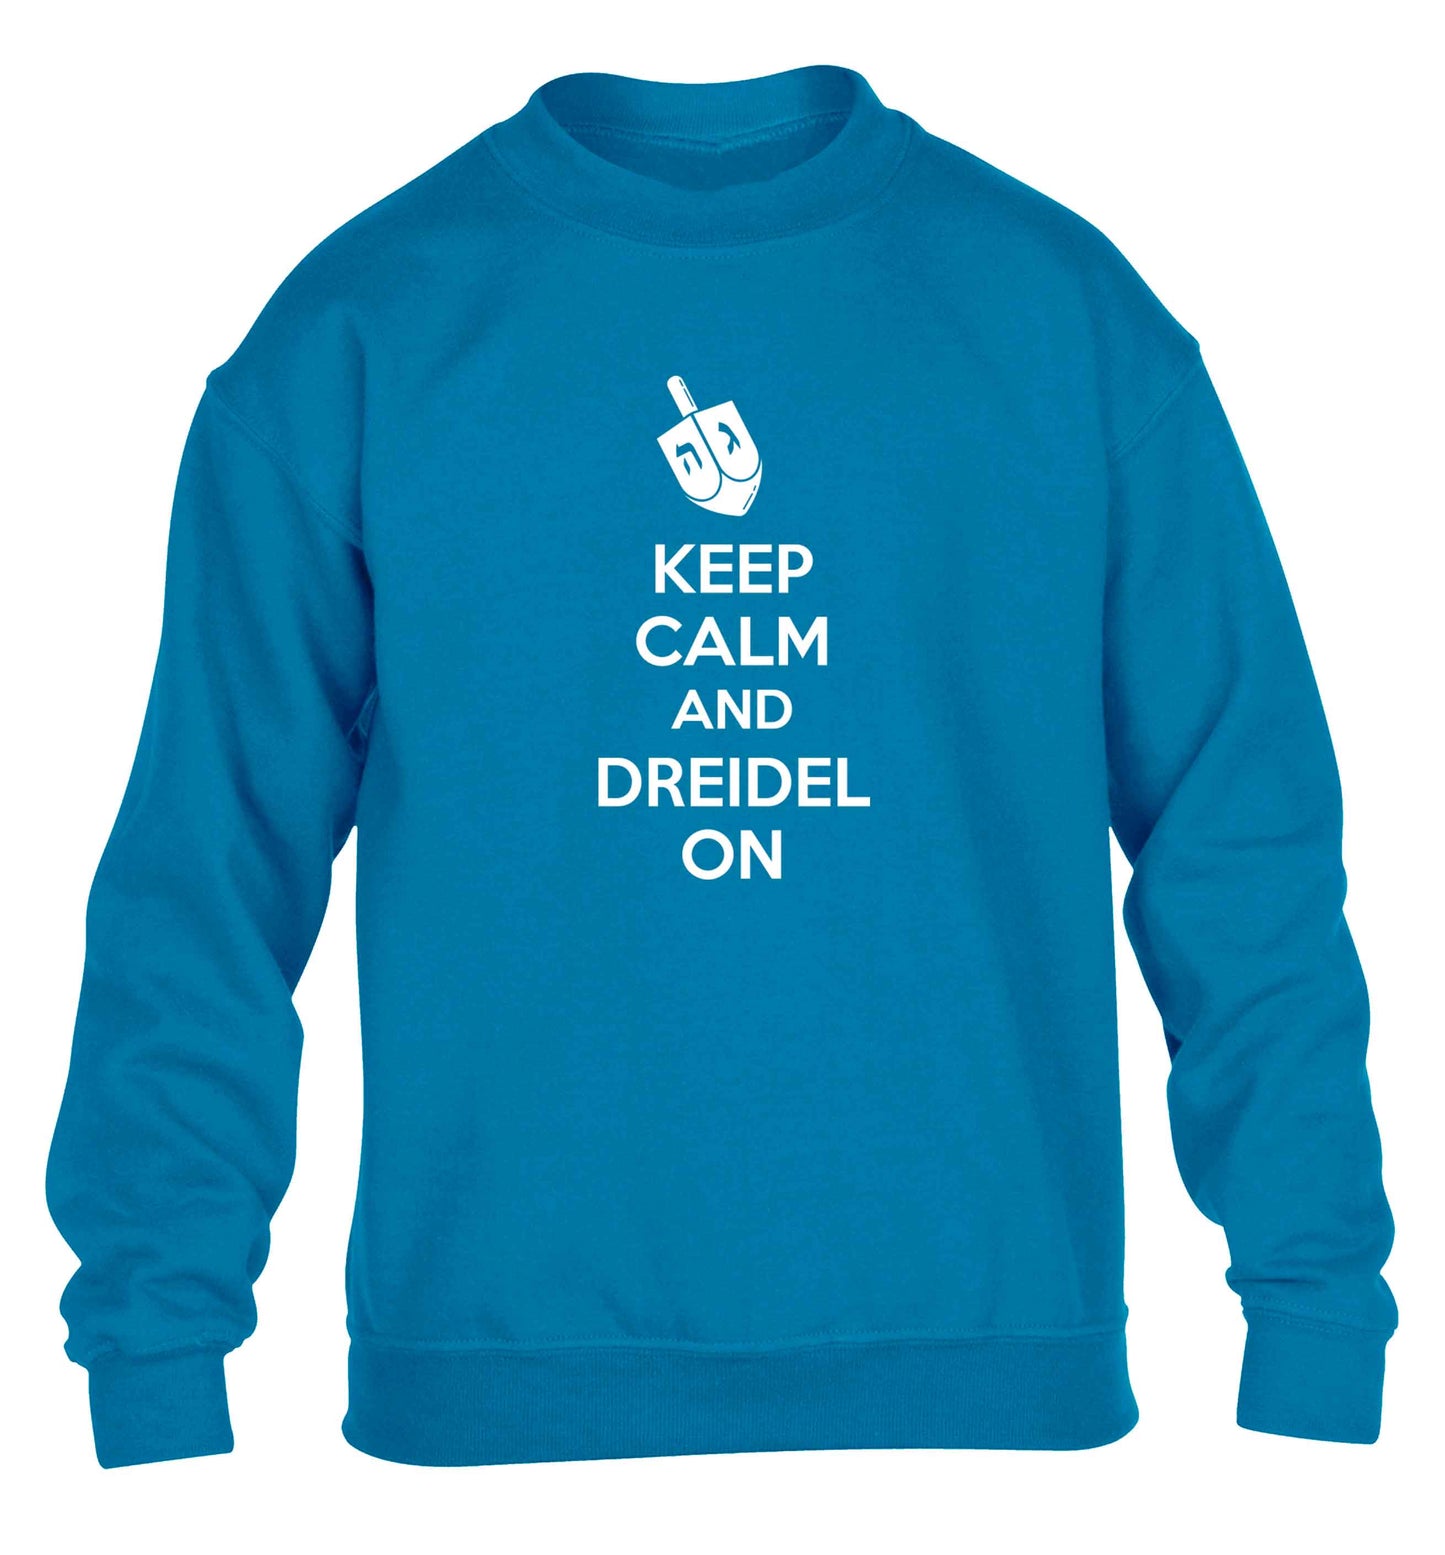 Keep calm and dreidel on children's blue sweater 12-13 Years